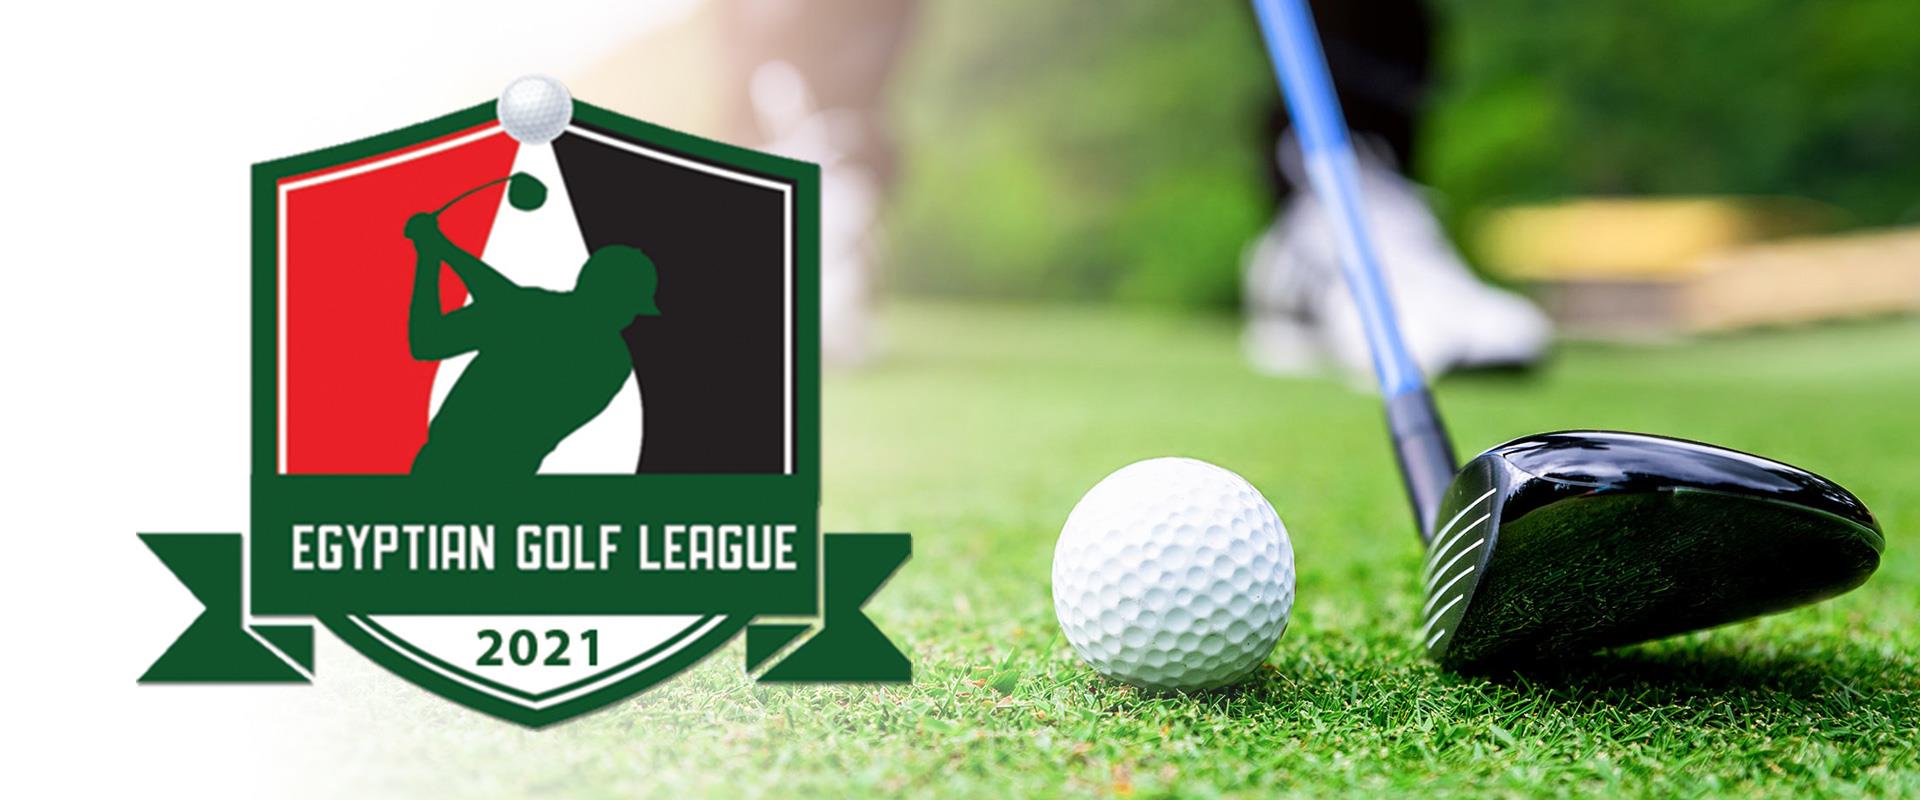 Alexandria Sporting Club Leads the Egyptian Golf League